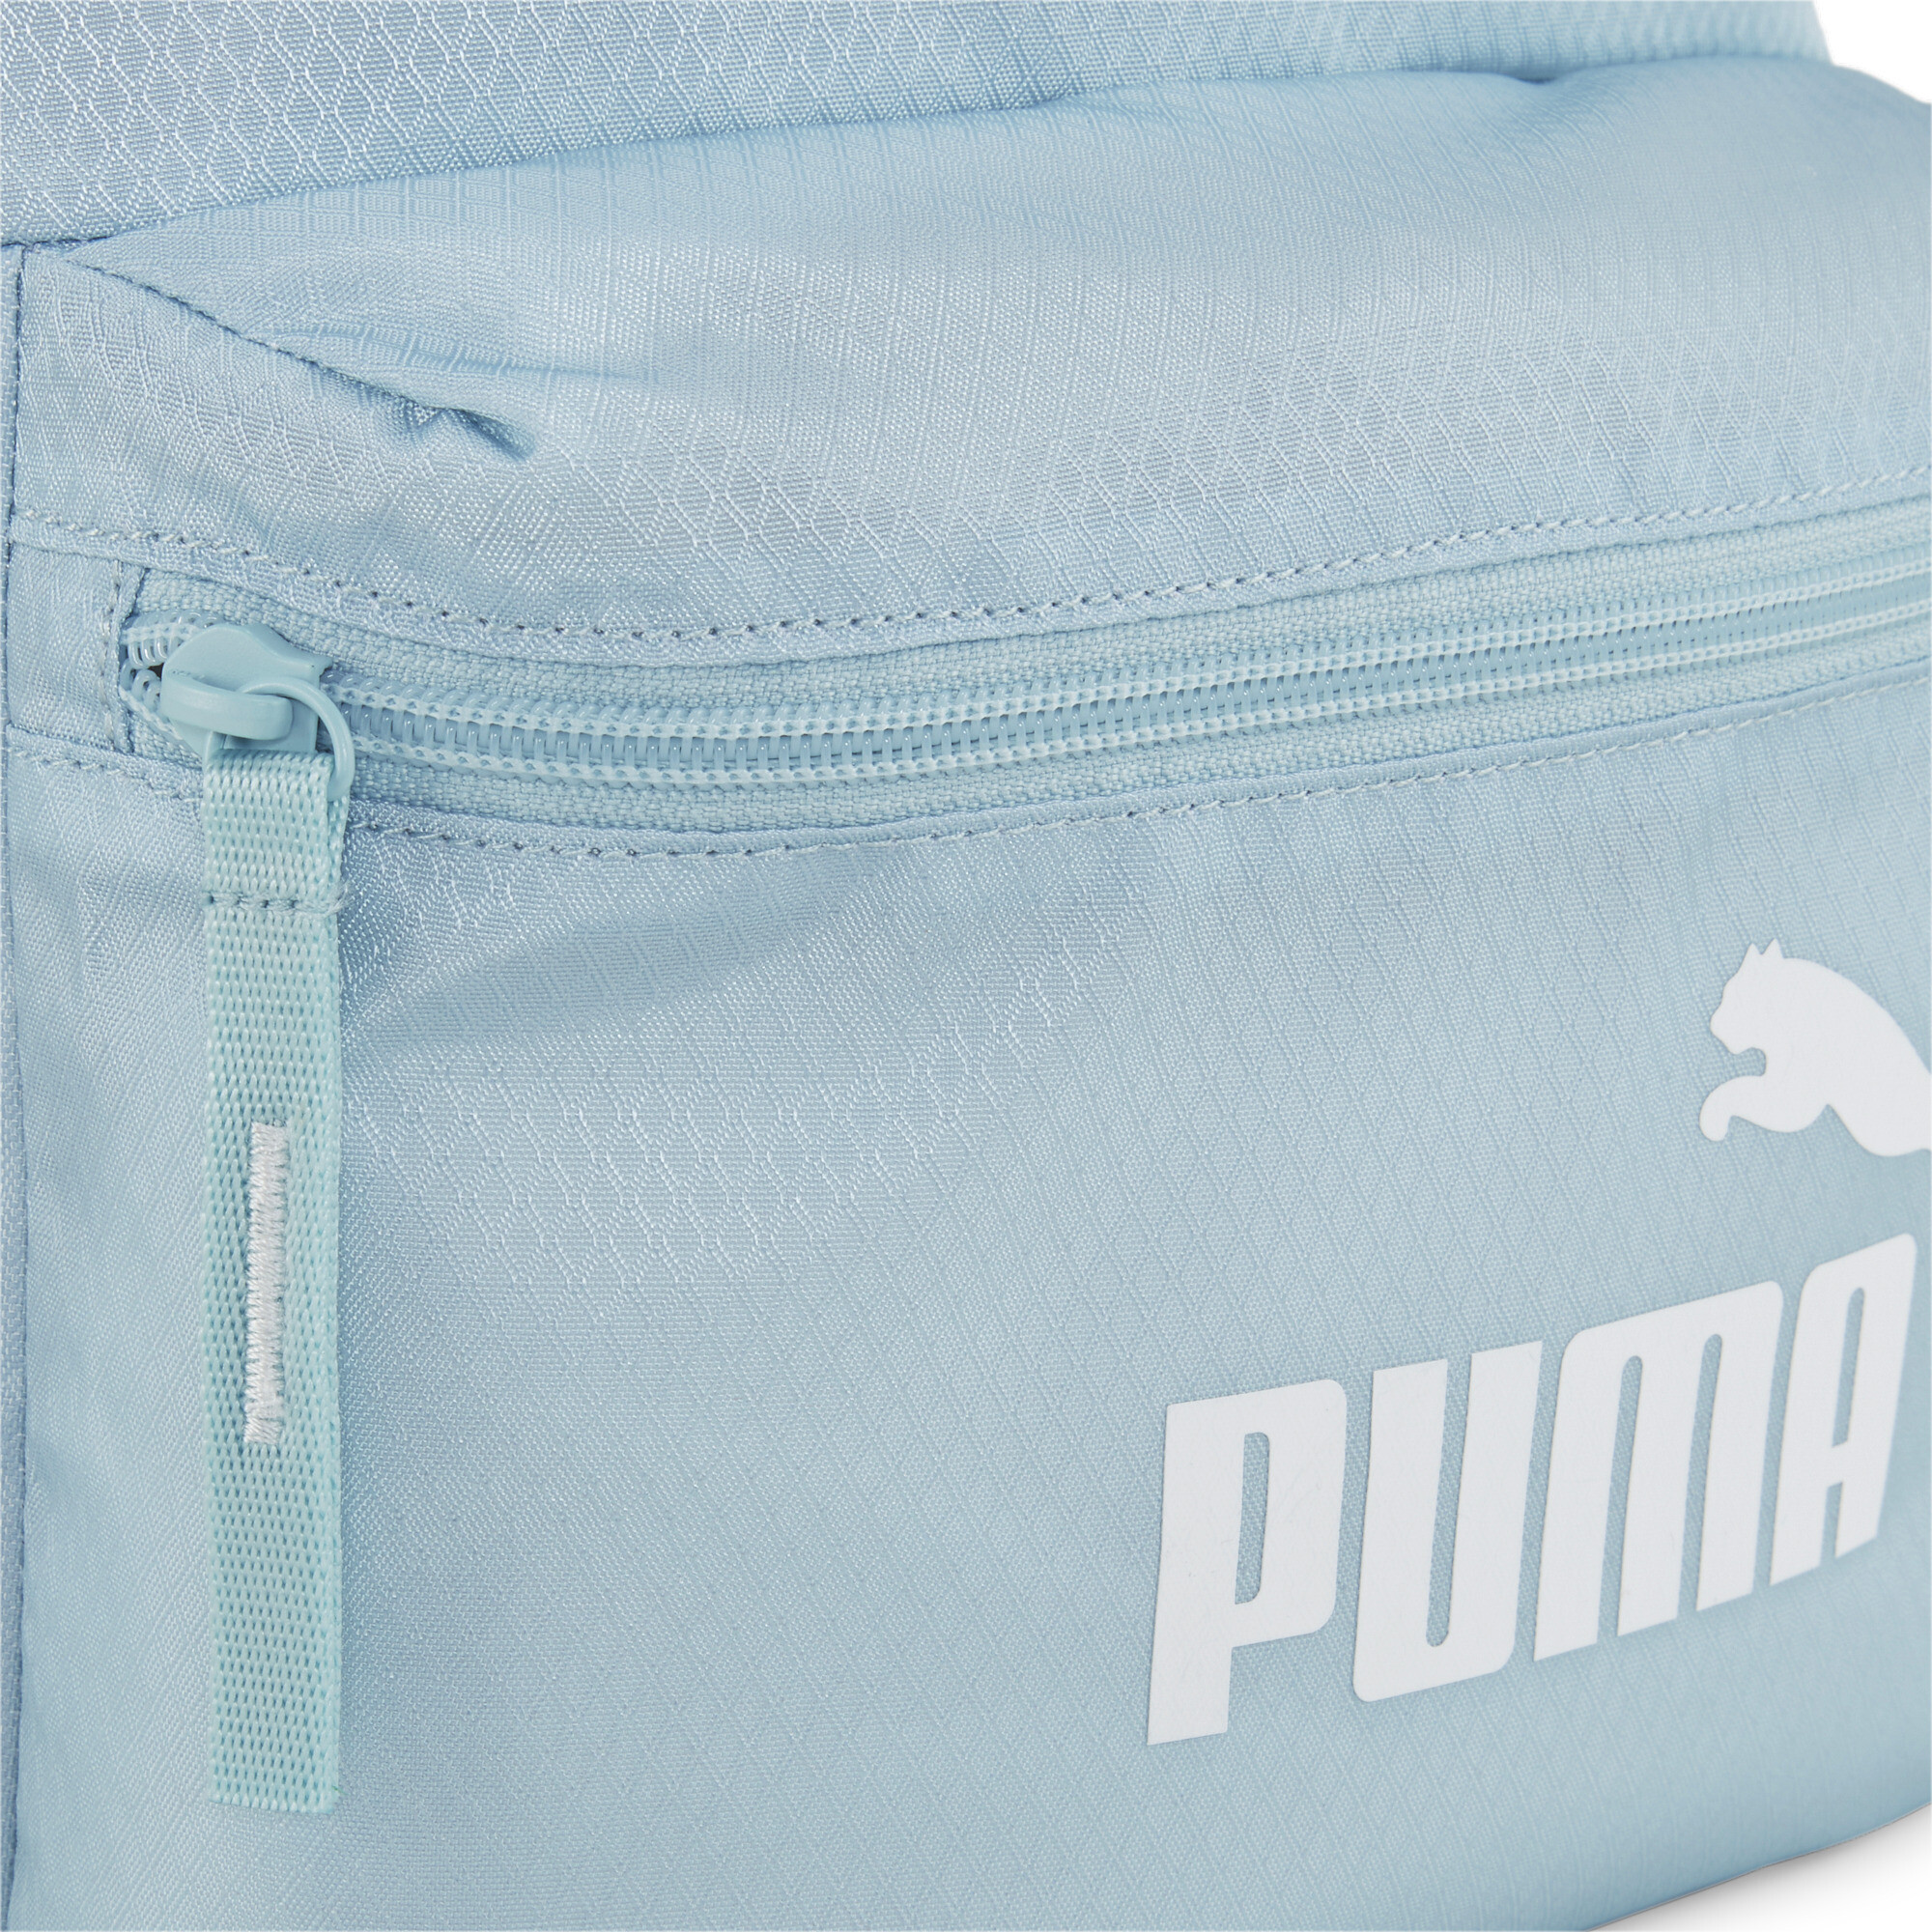 Women's Puma Core Base Backpack, Blue, Accessories